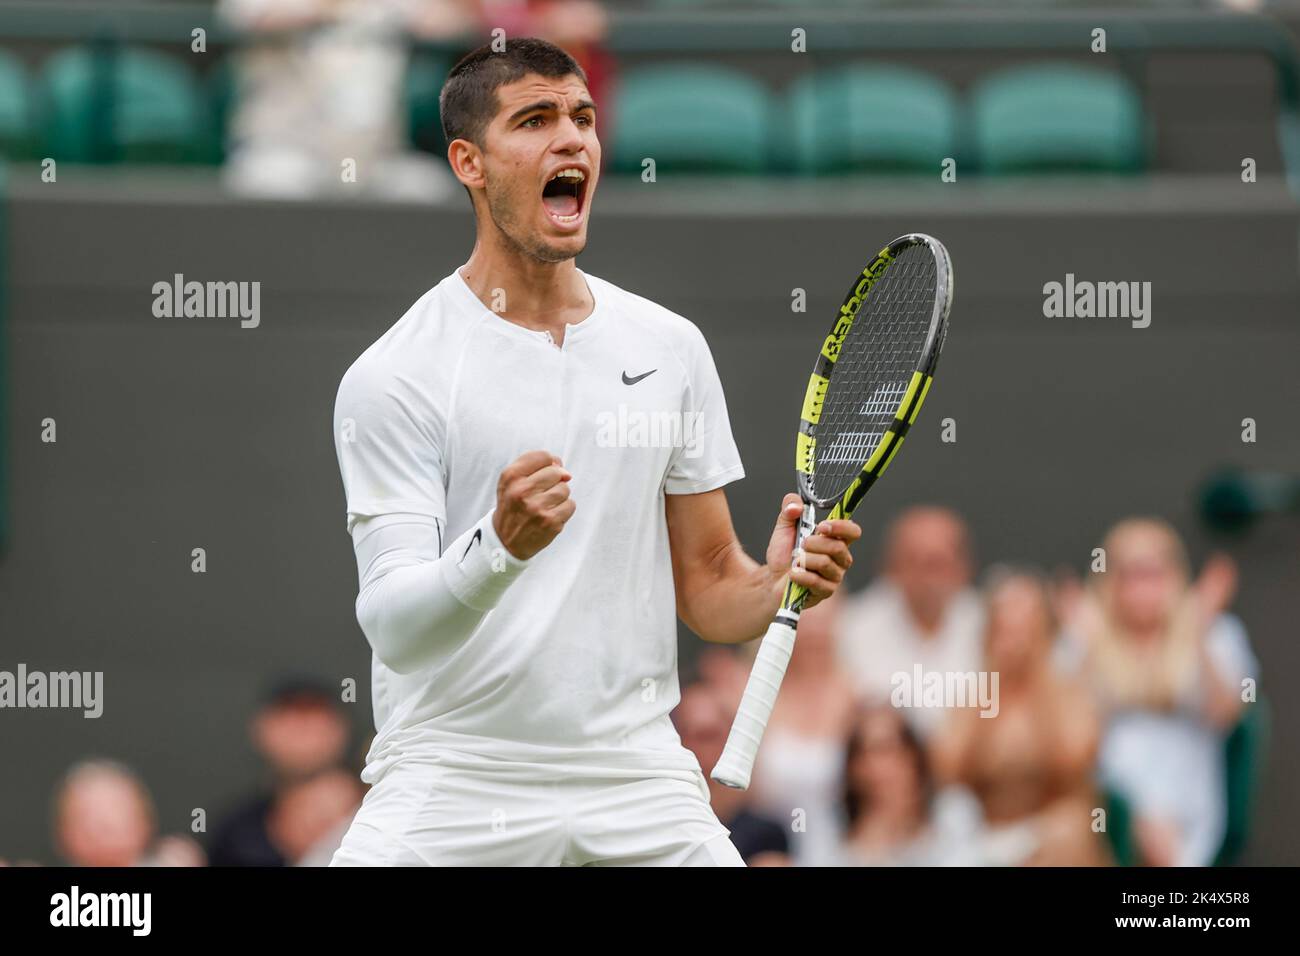 Der spanische Tennisspieler Carlos Alcaraz feiert während der Wimbledon Championships 2022, London, England, Vereinigtes Königreich Stockfoto